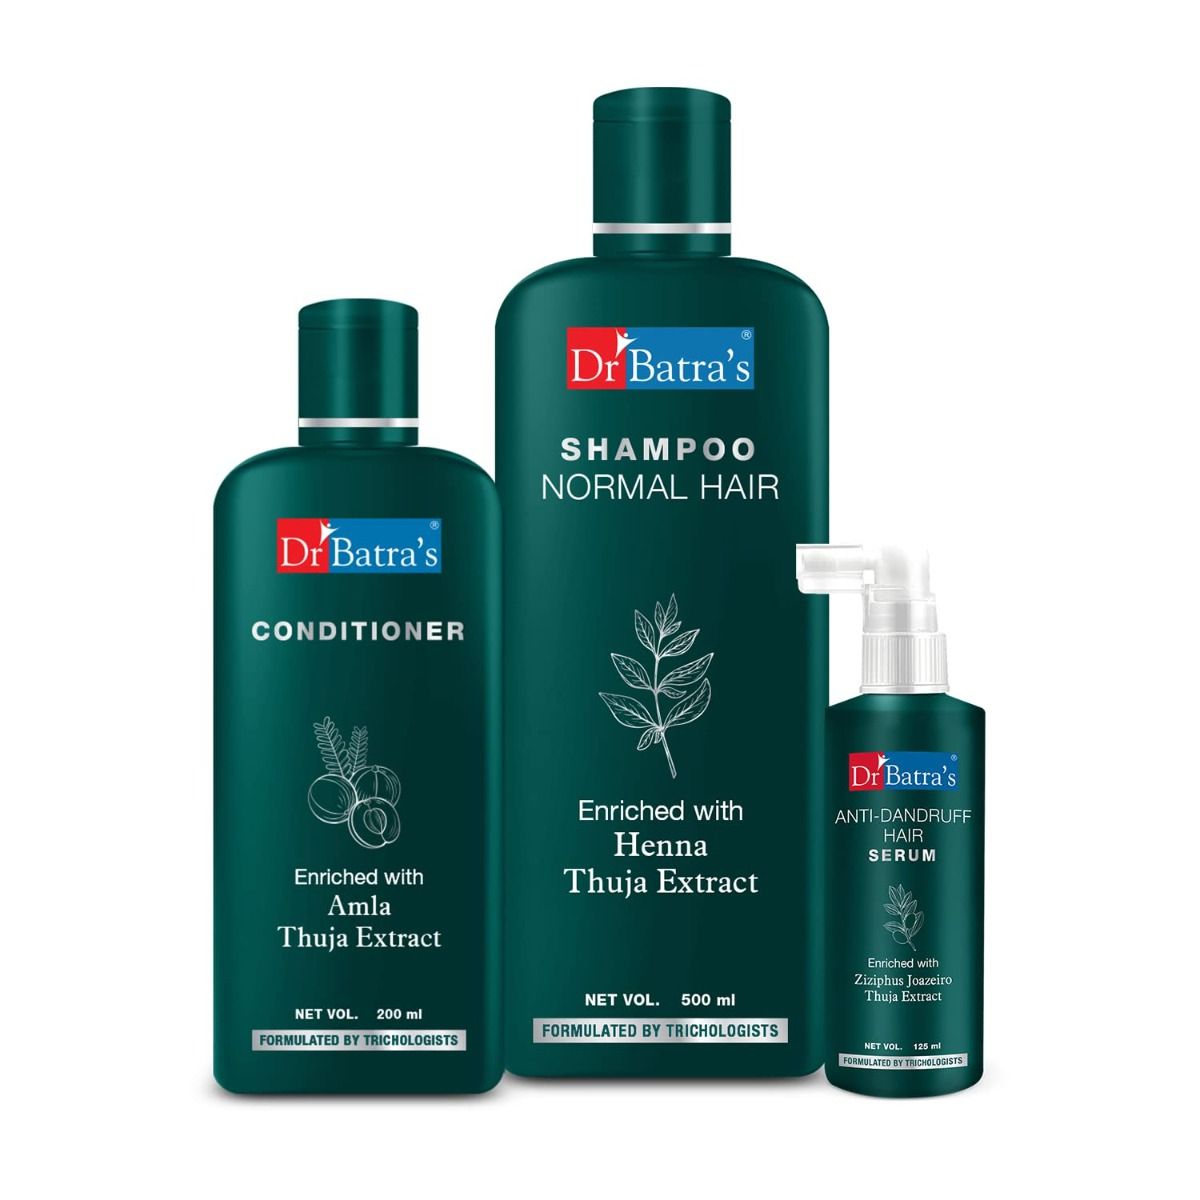     			Dr Batra's Anti Dandruff Hair Serum, Conditioner - 200 ml and Normal Shampoo - 500 ml